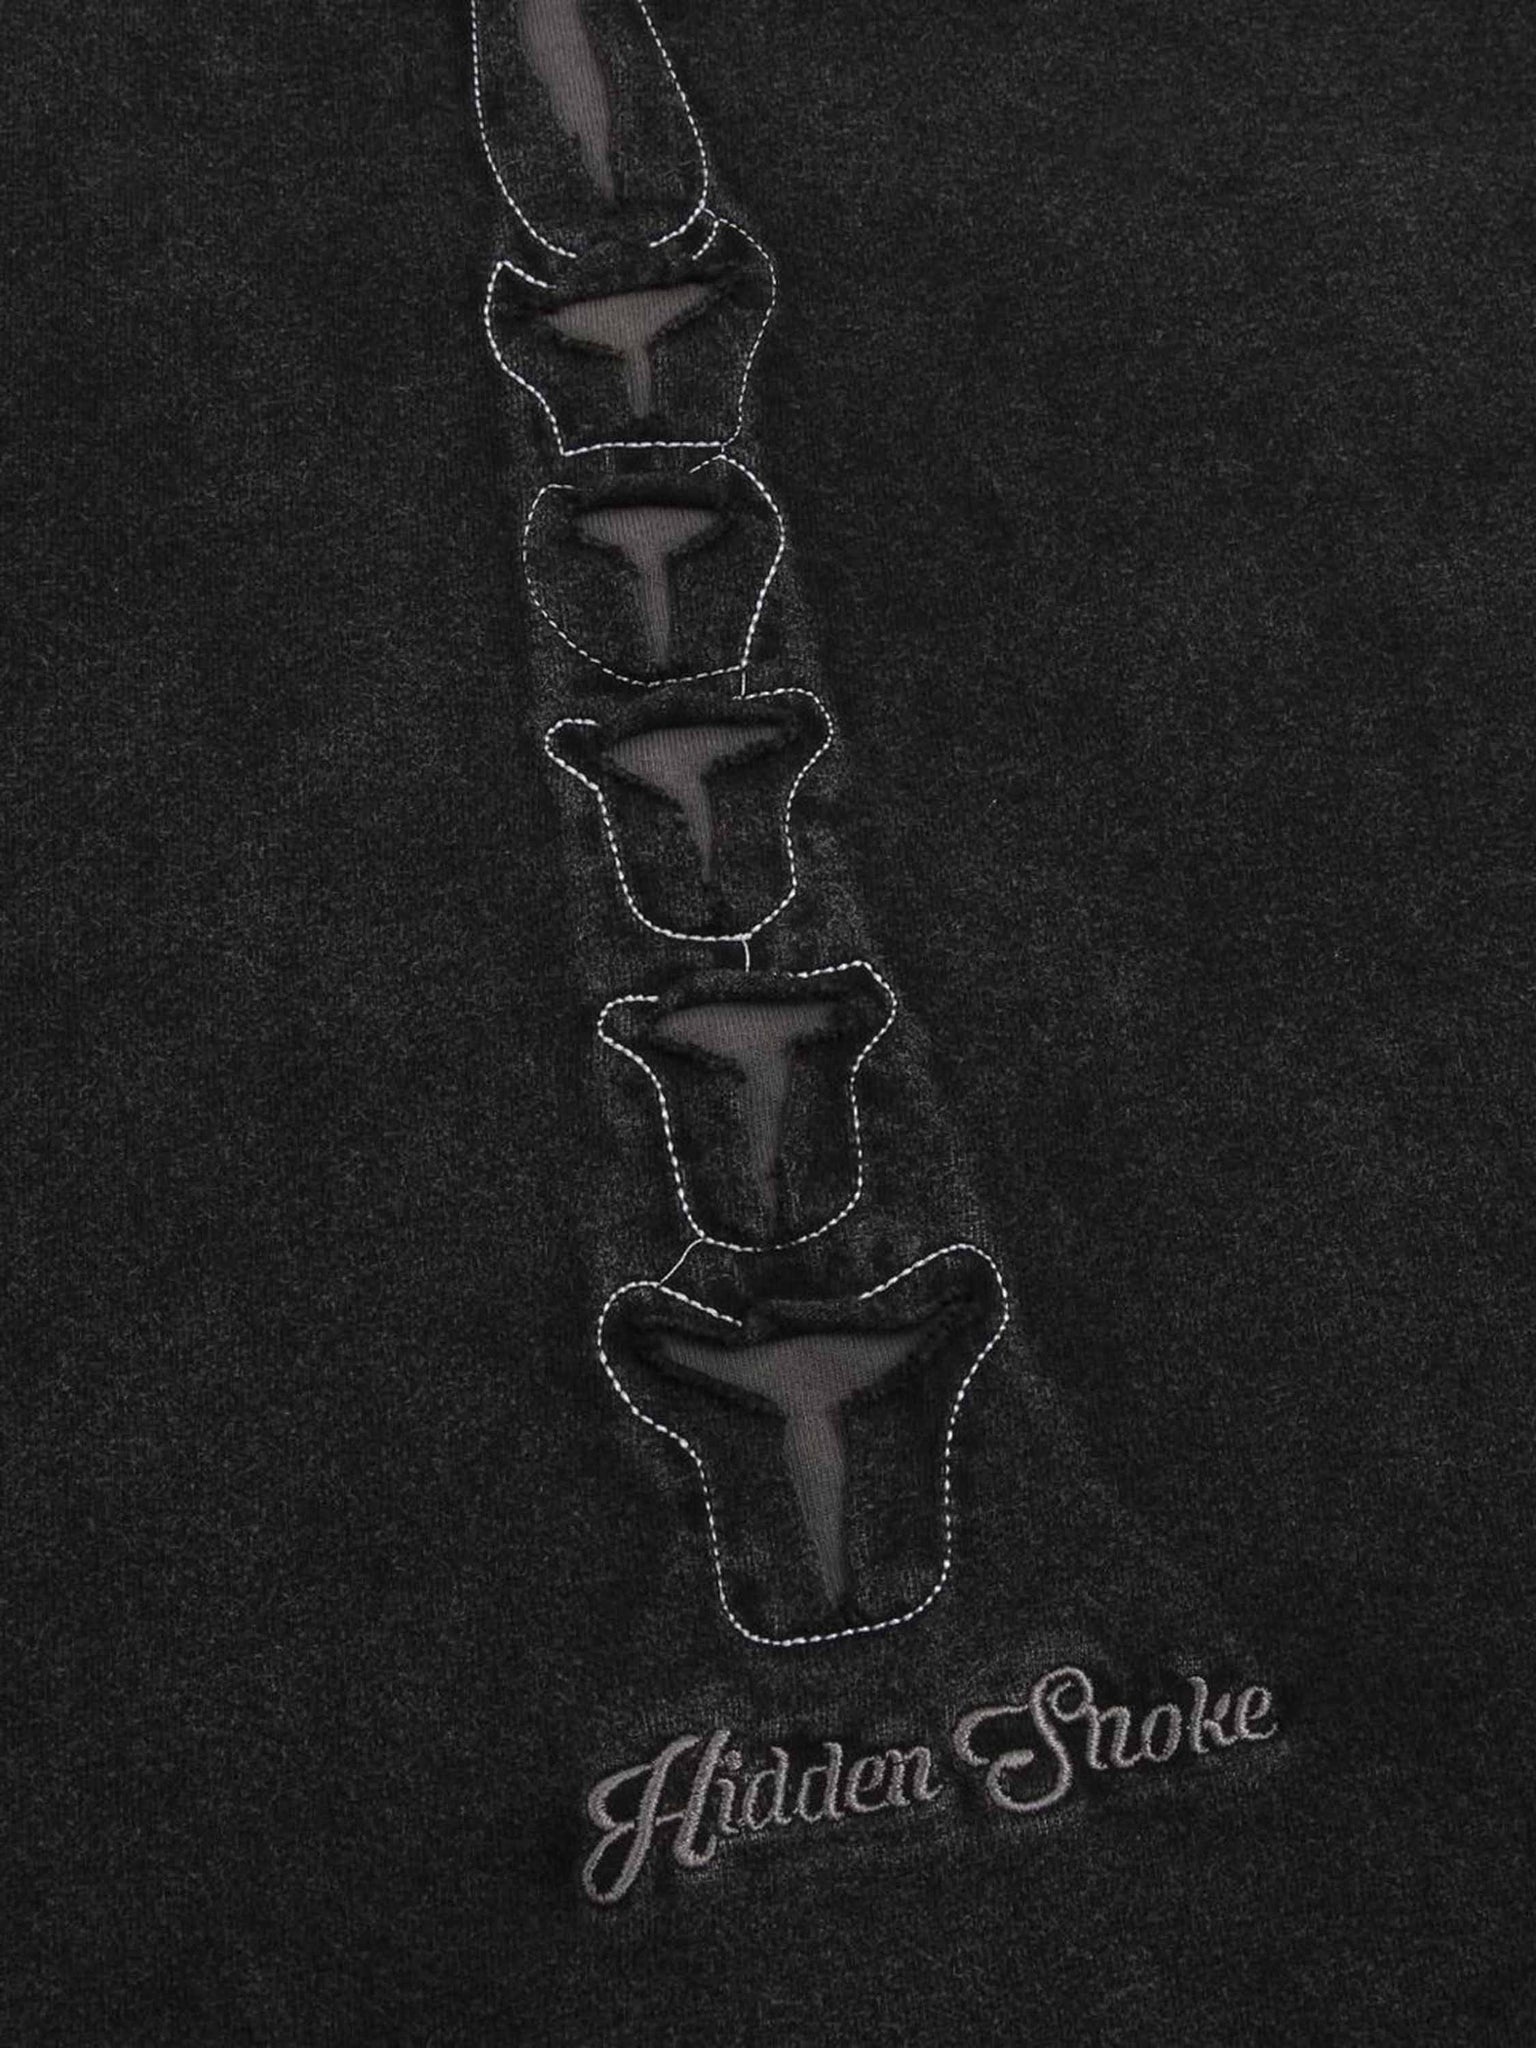 Thesupermade American Street Dark Bones Washed Old Heavyweight Short-sleeved T-shirt - 1627